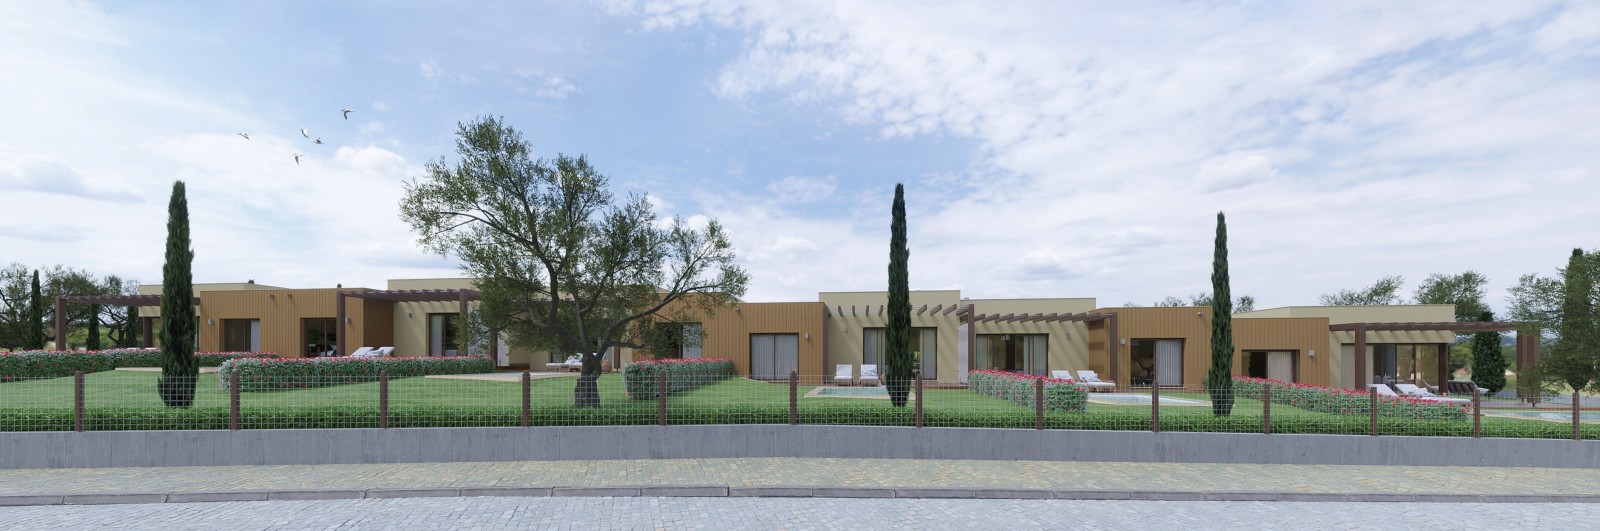 2 bedroom semi-detached villa with swimming pool for sale in Golf resort, Algarve_218828